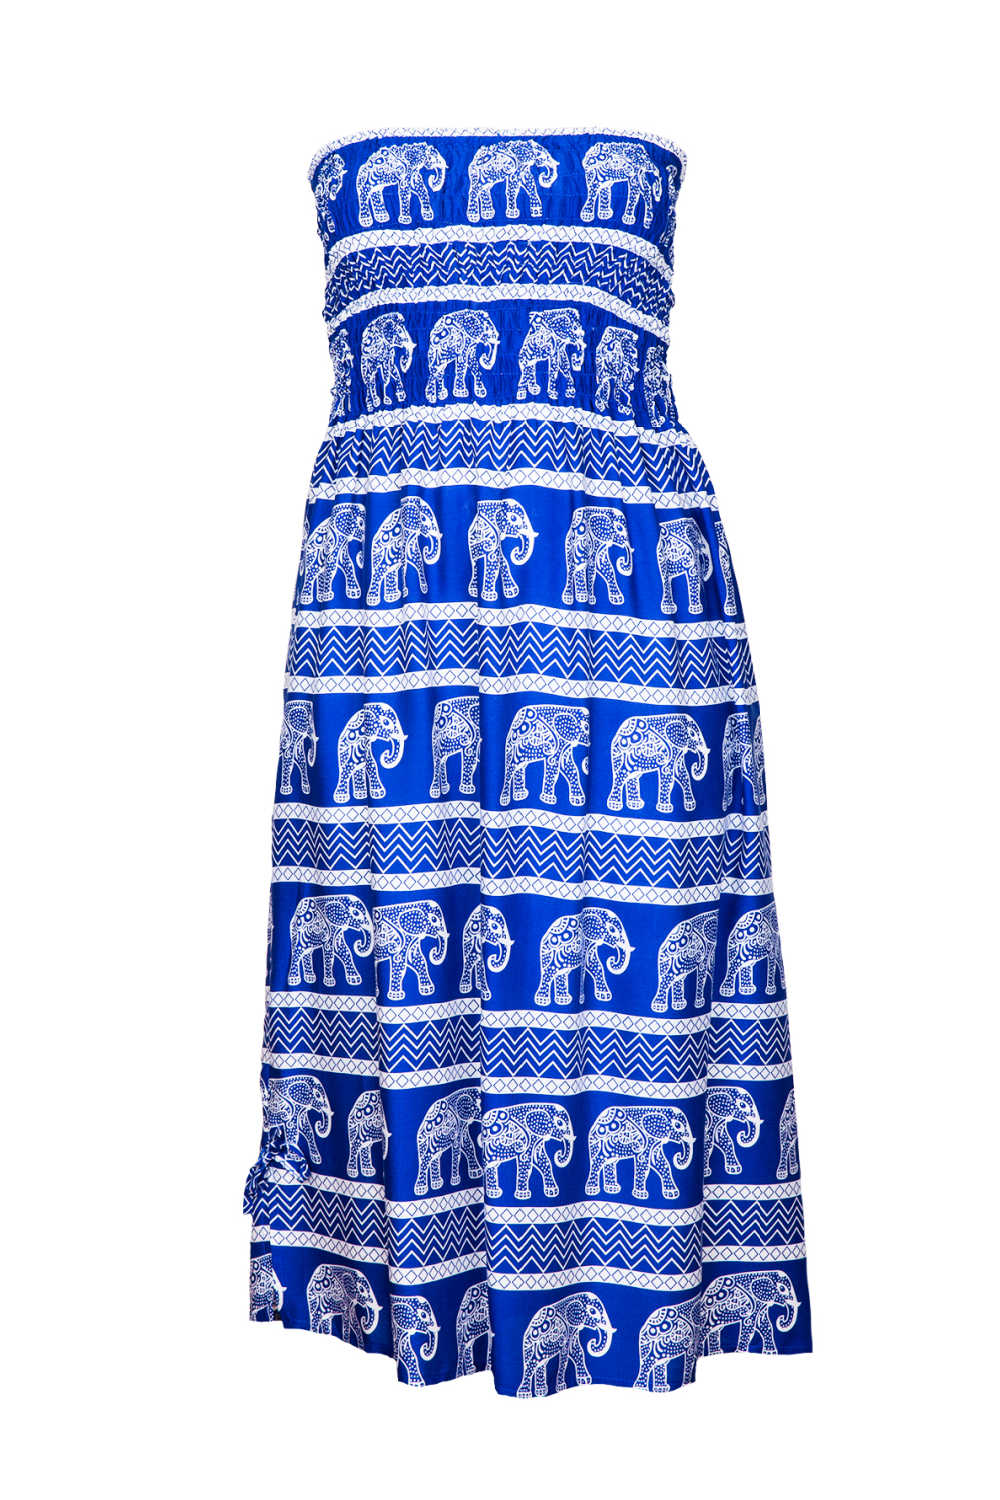 boob-tube-dress-blue-white-elephant-print